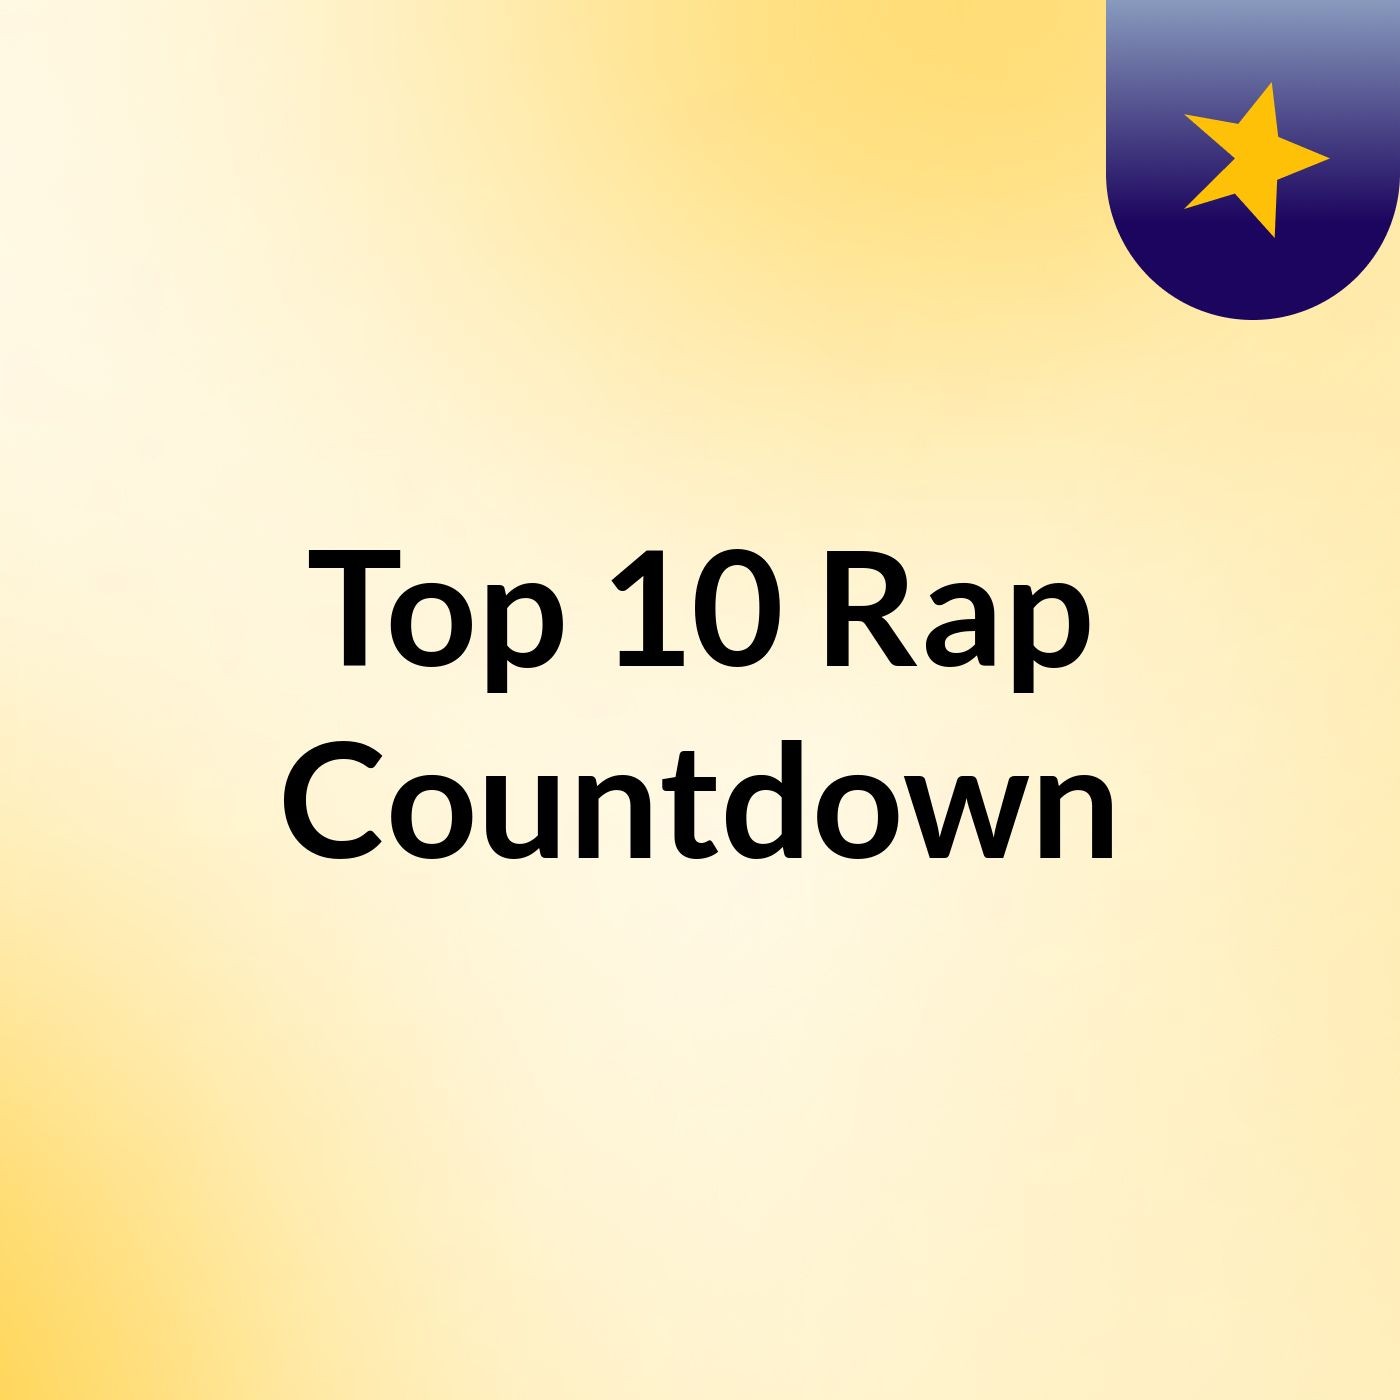 Top 10 Rap Countdown